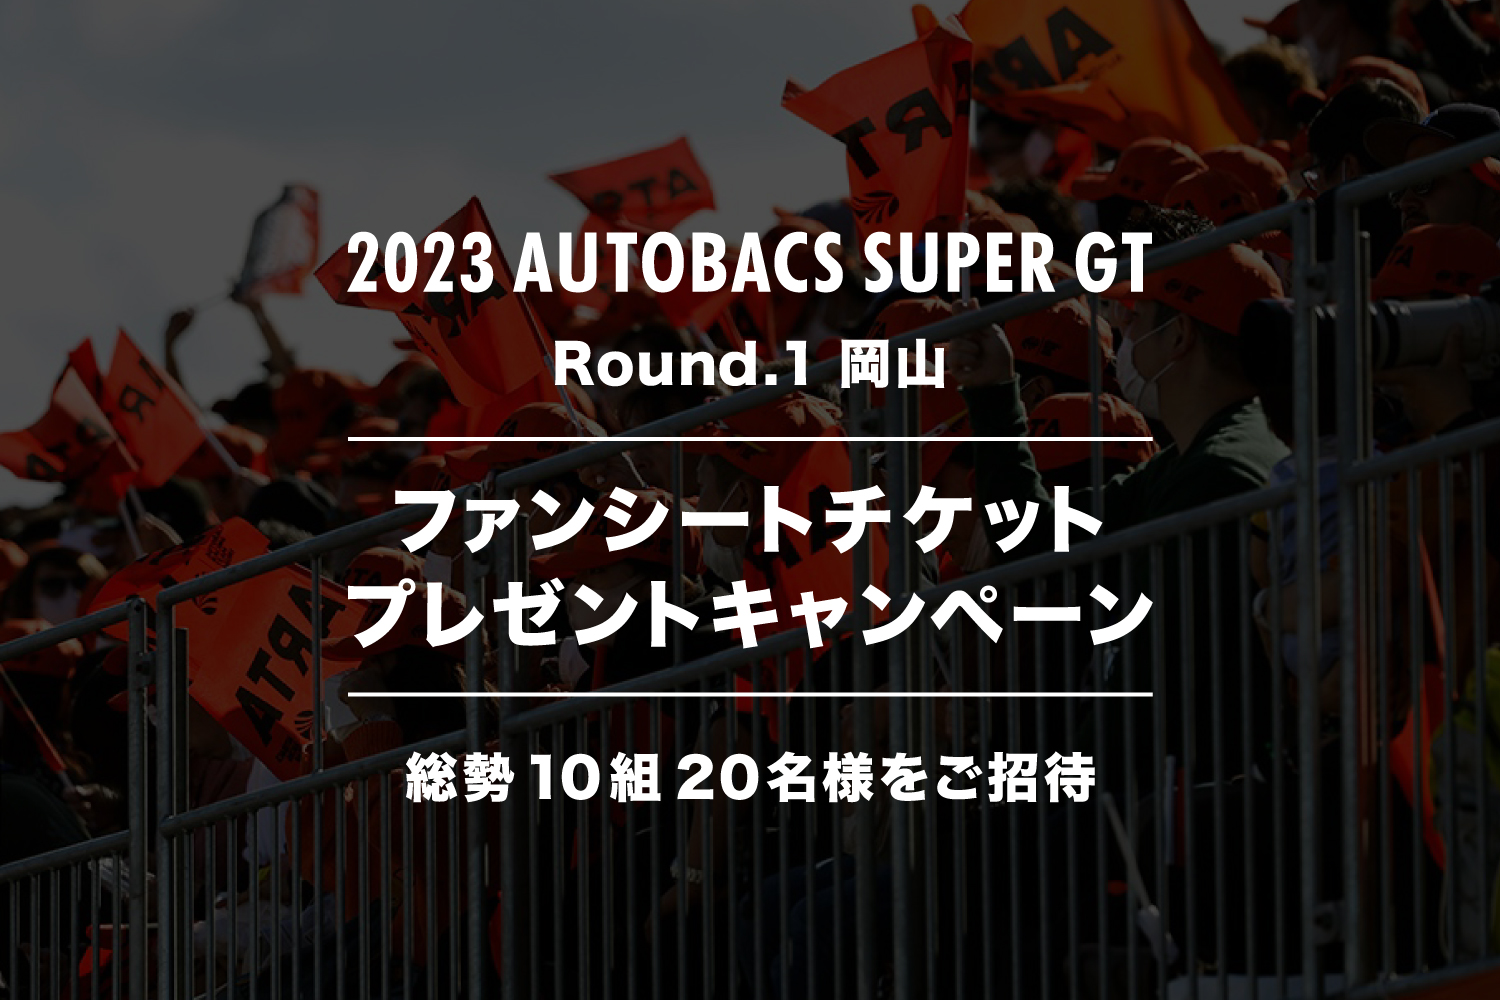 2023 AUTOBACS SUPER GT Round.1 (岡山国際サーキット) ファンシート